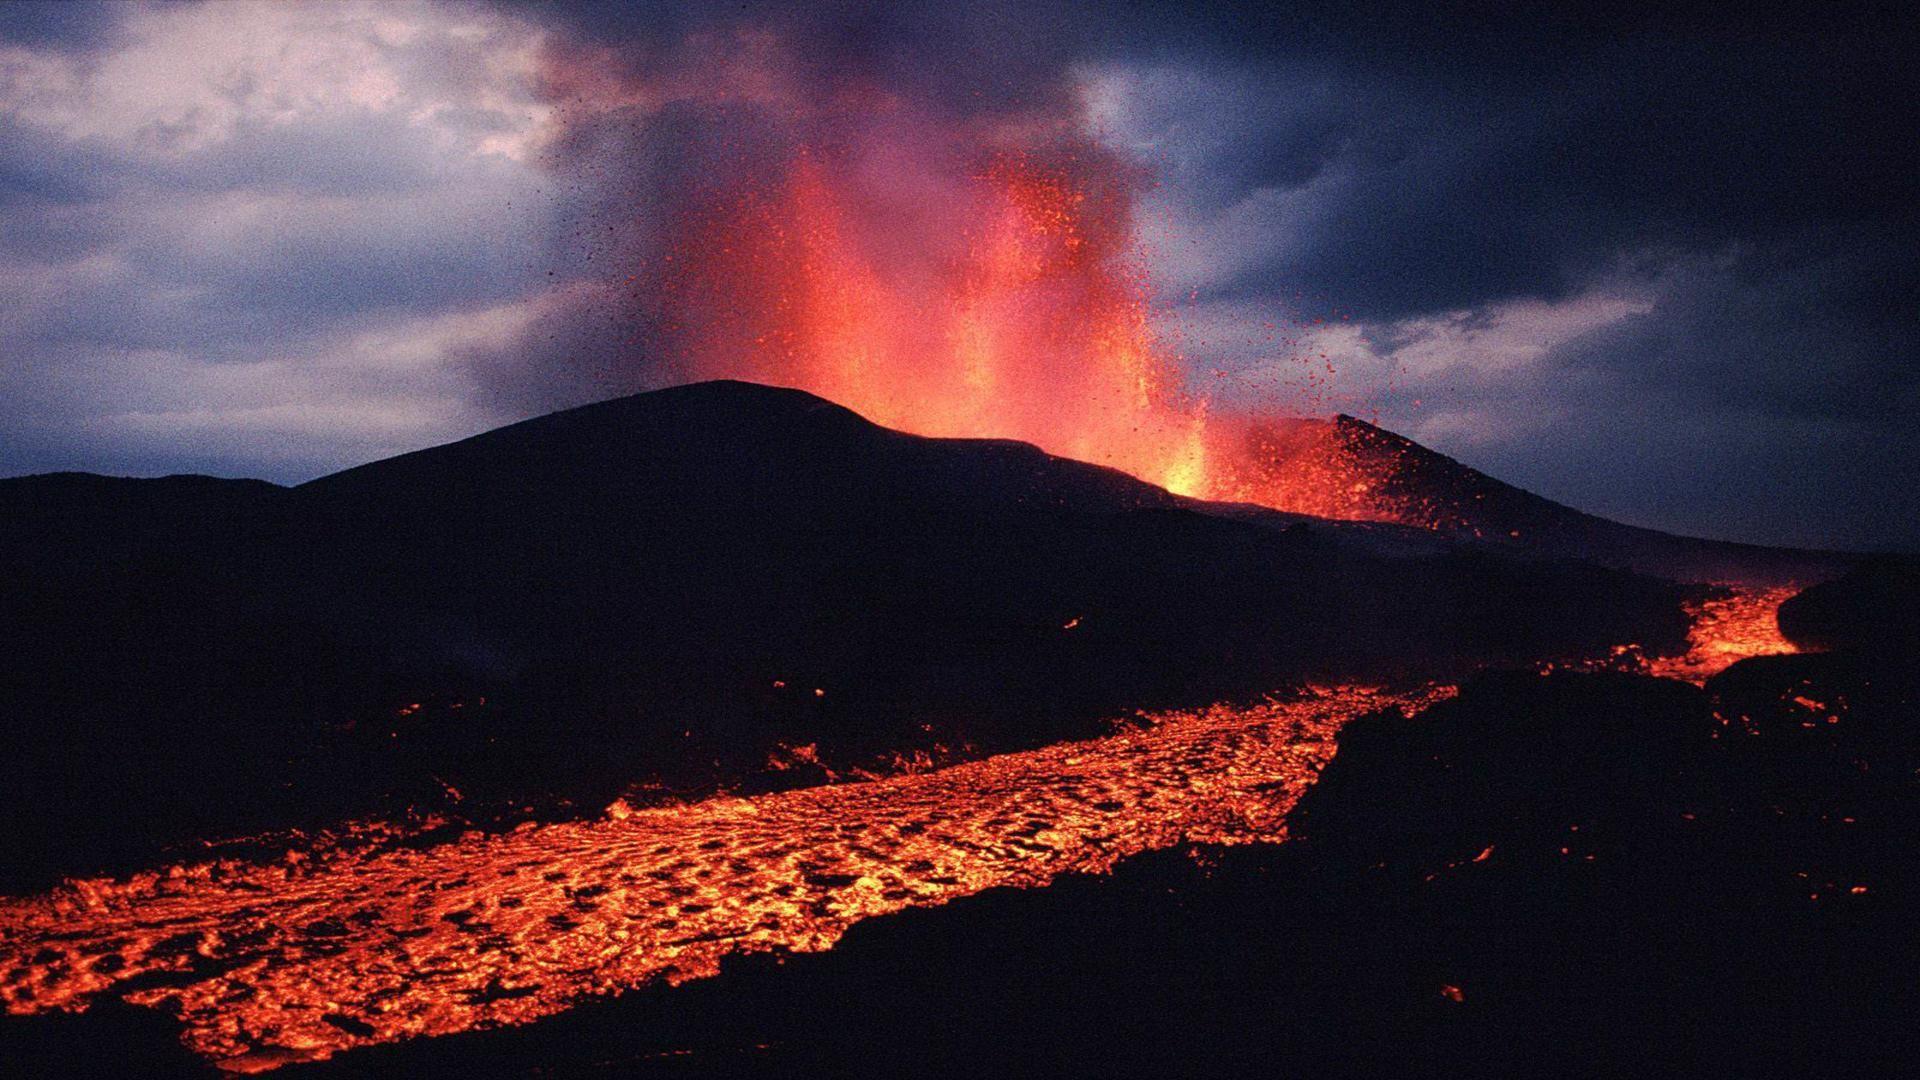 Kimanura volcano erupting virunga national park democratic